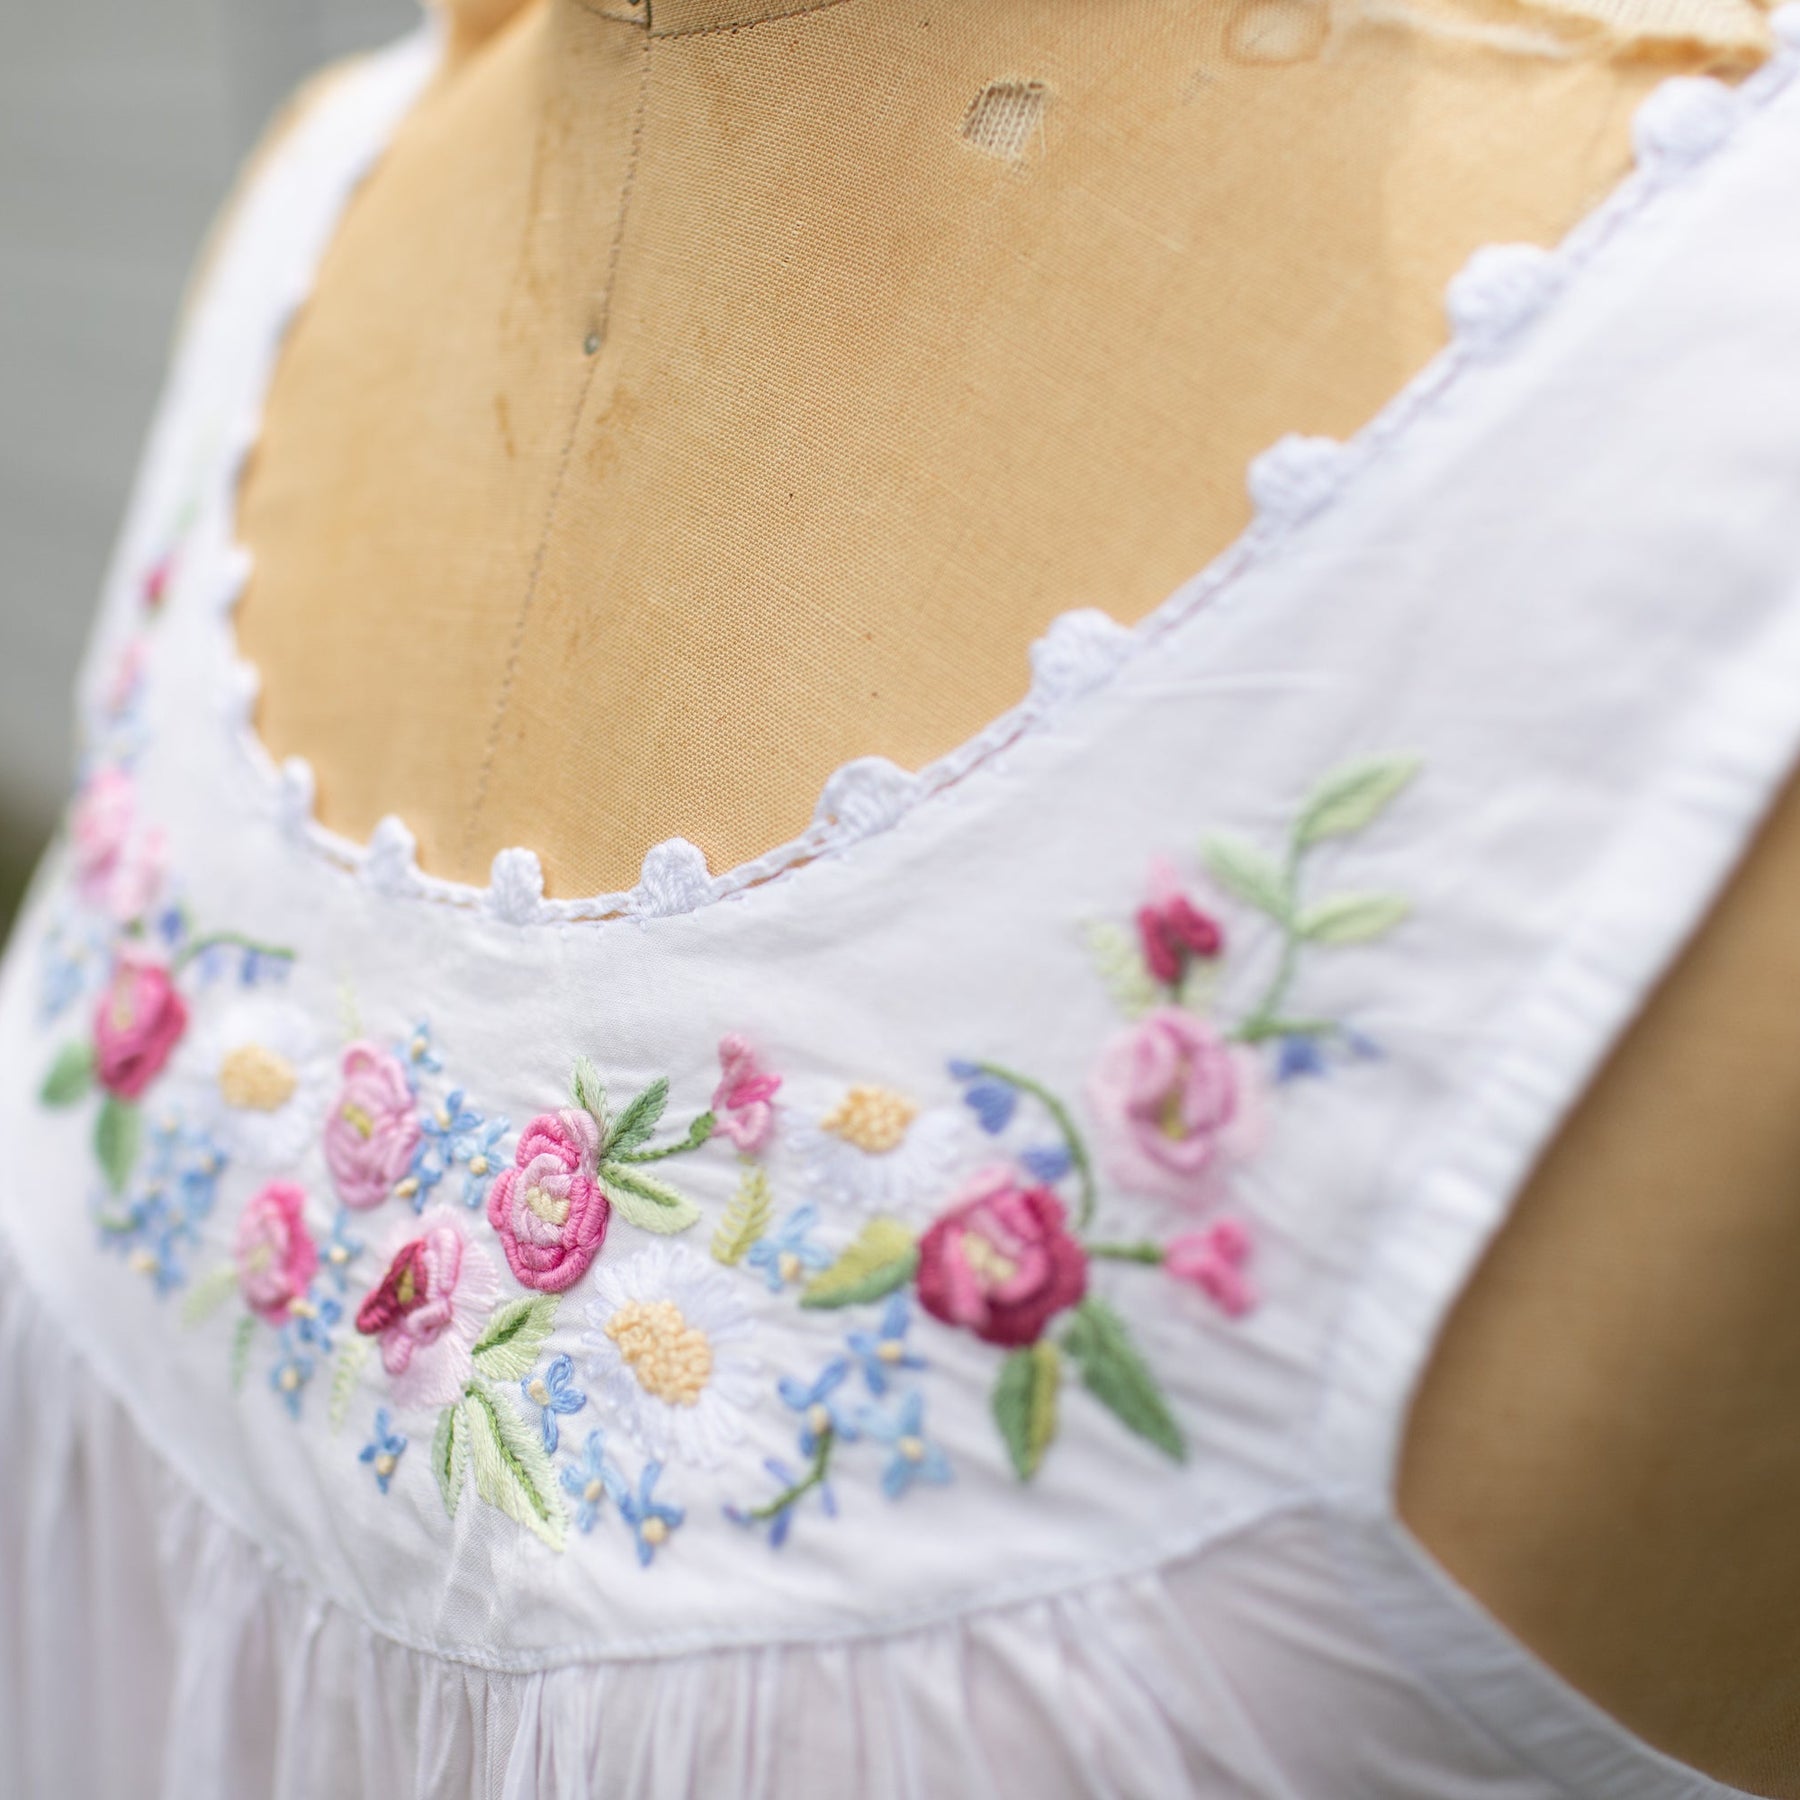 Rosebud Brushed Cotton Waltz Nightgown